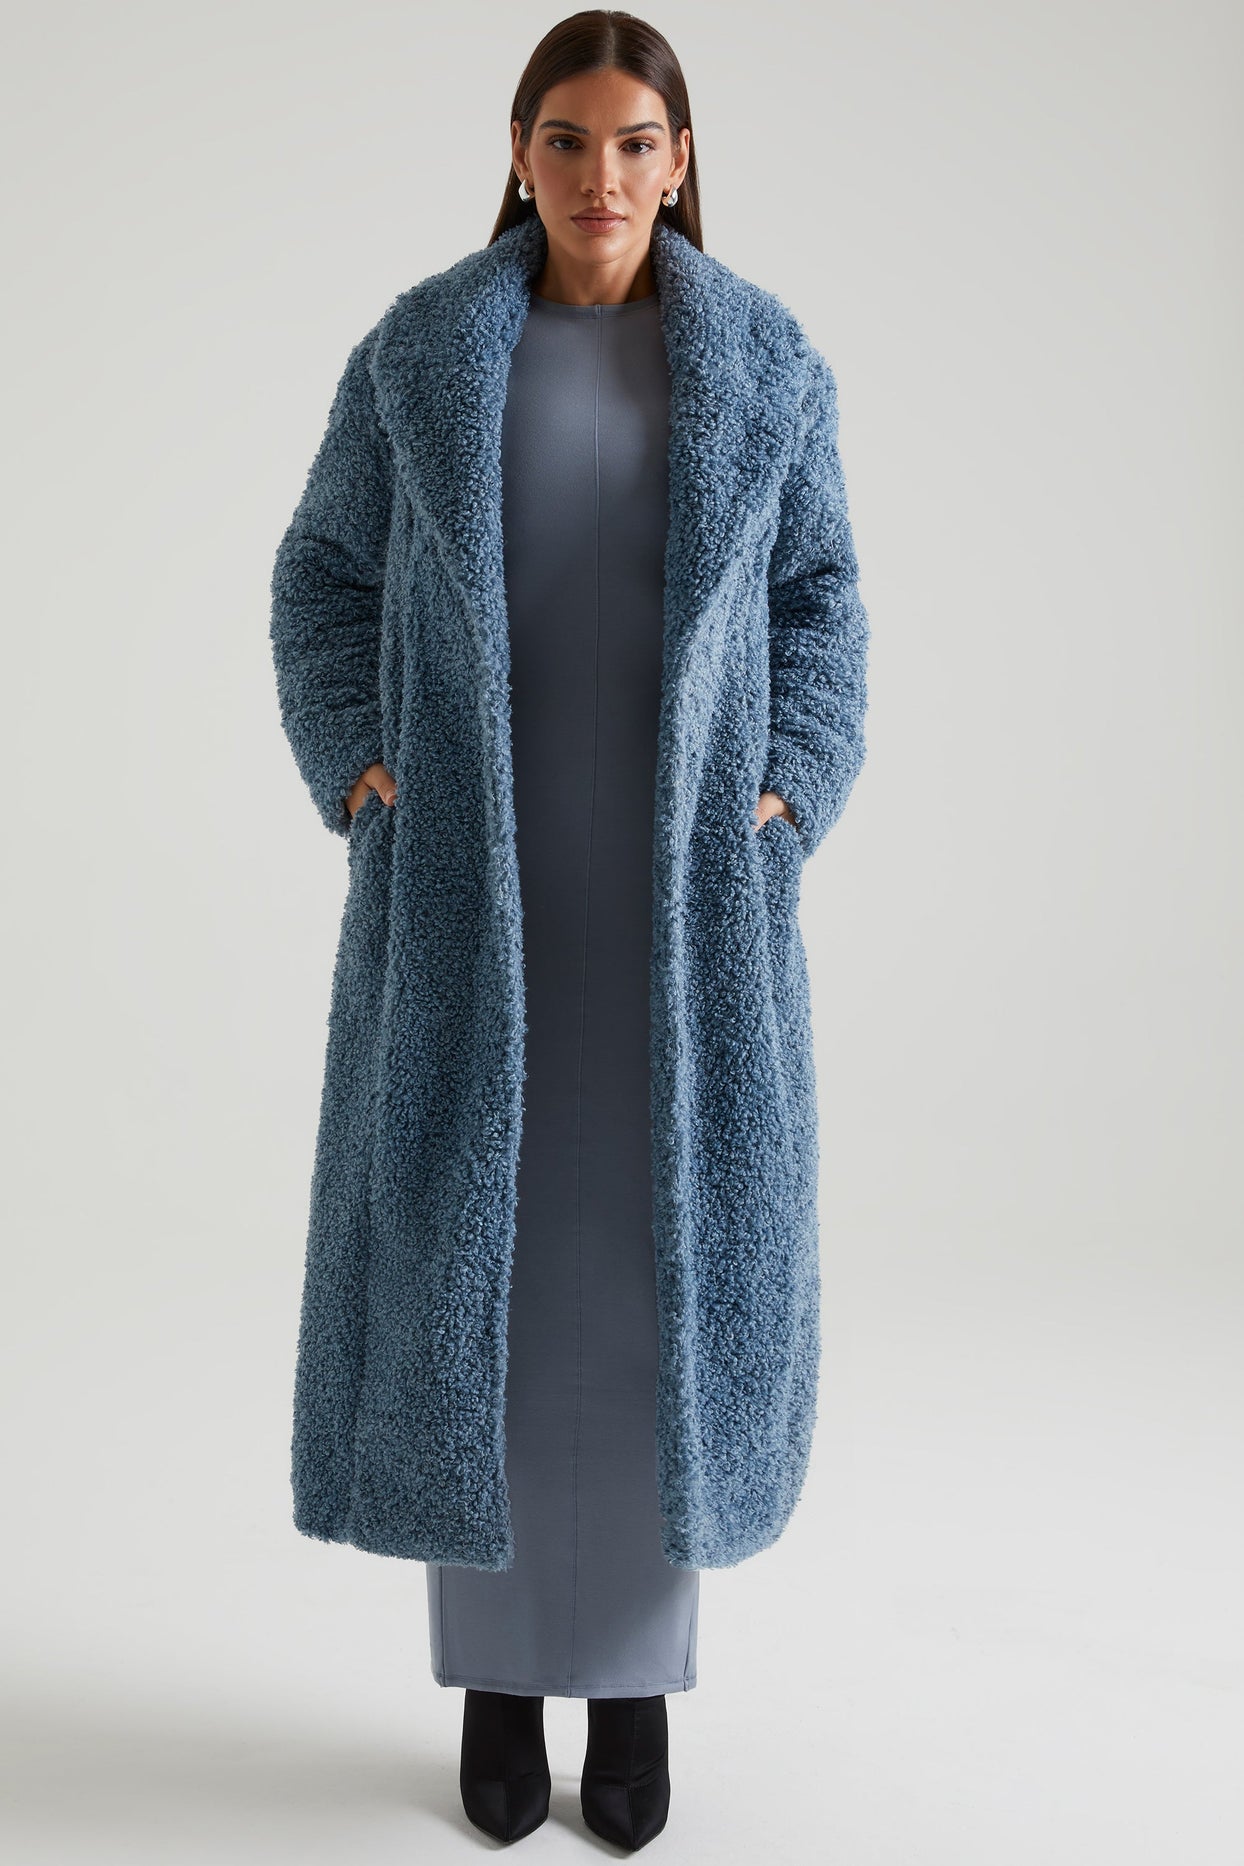 Alaska Long Shearling Coat in Blue | Oh Polly